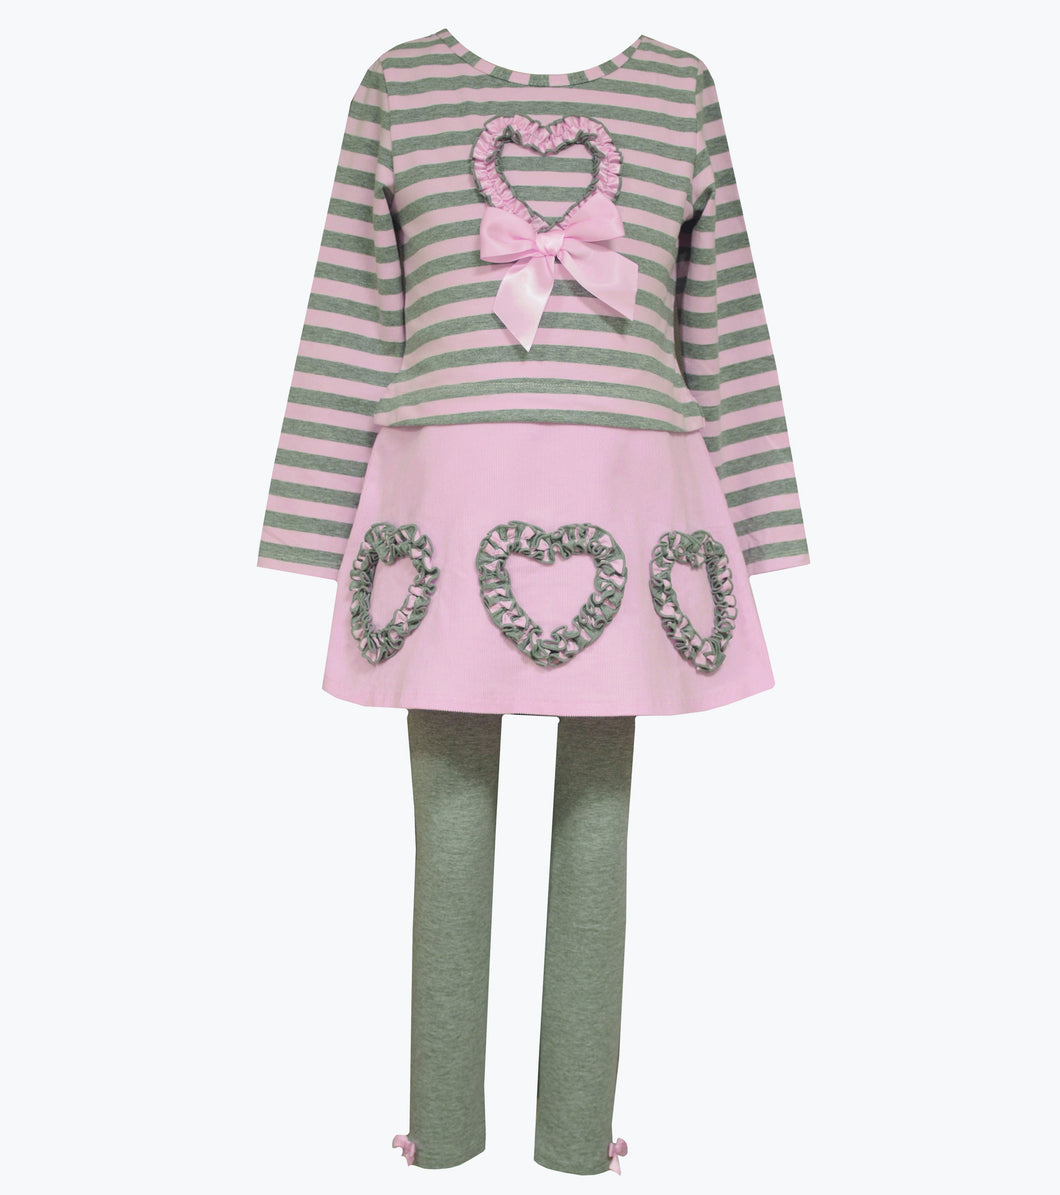 Bonnie Jean stripes and hearts corduroy legging set